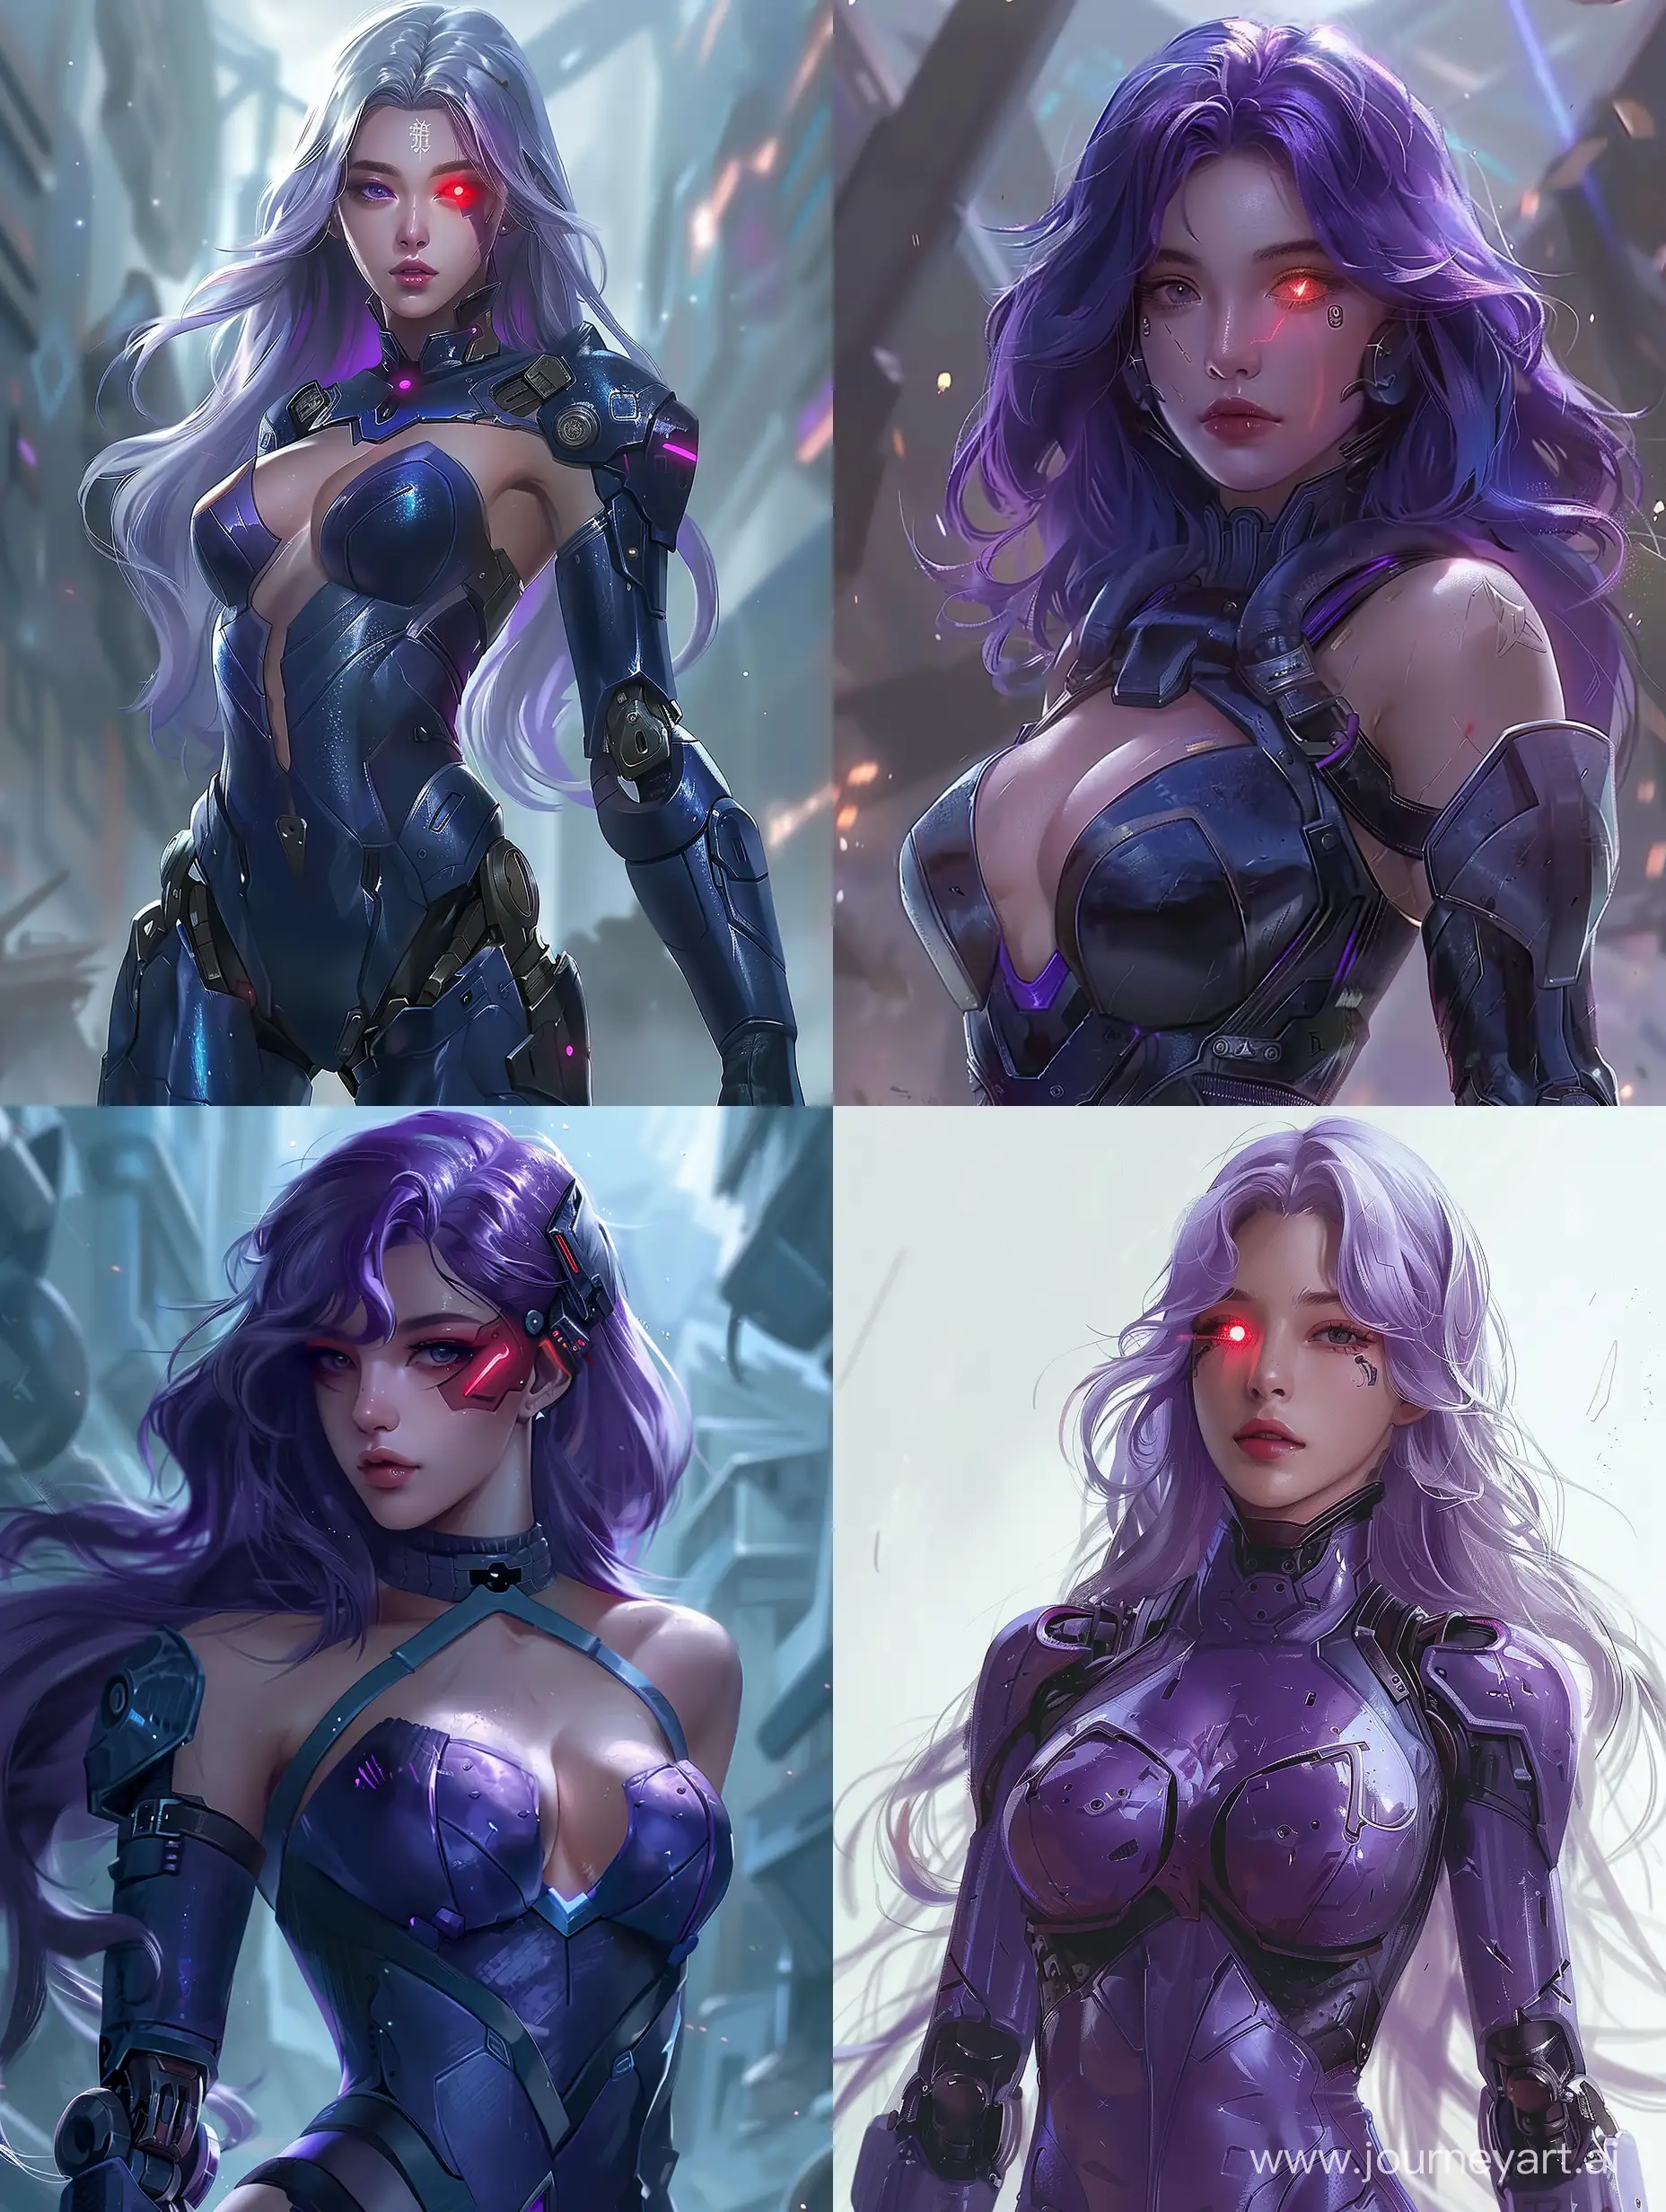 Lilia-Cyborg-Transformation-in-Mobile-Legends-Bang-Bang